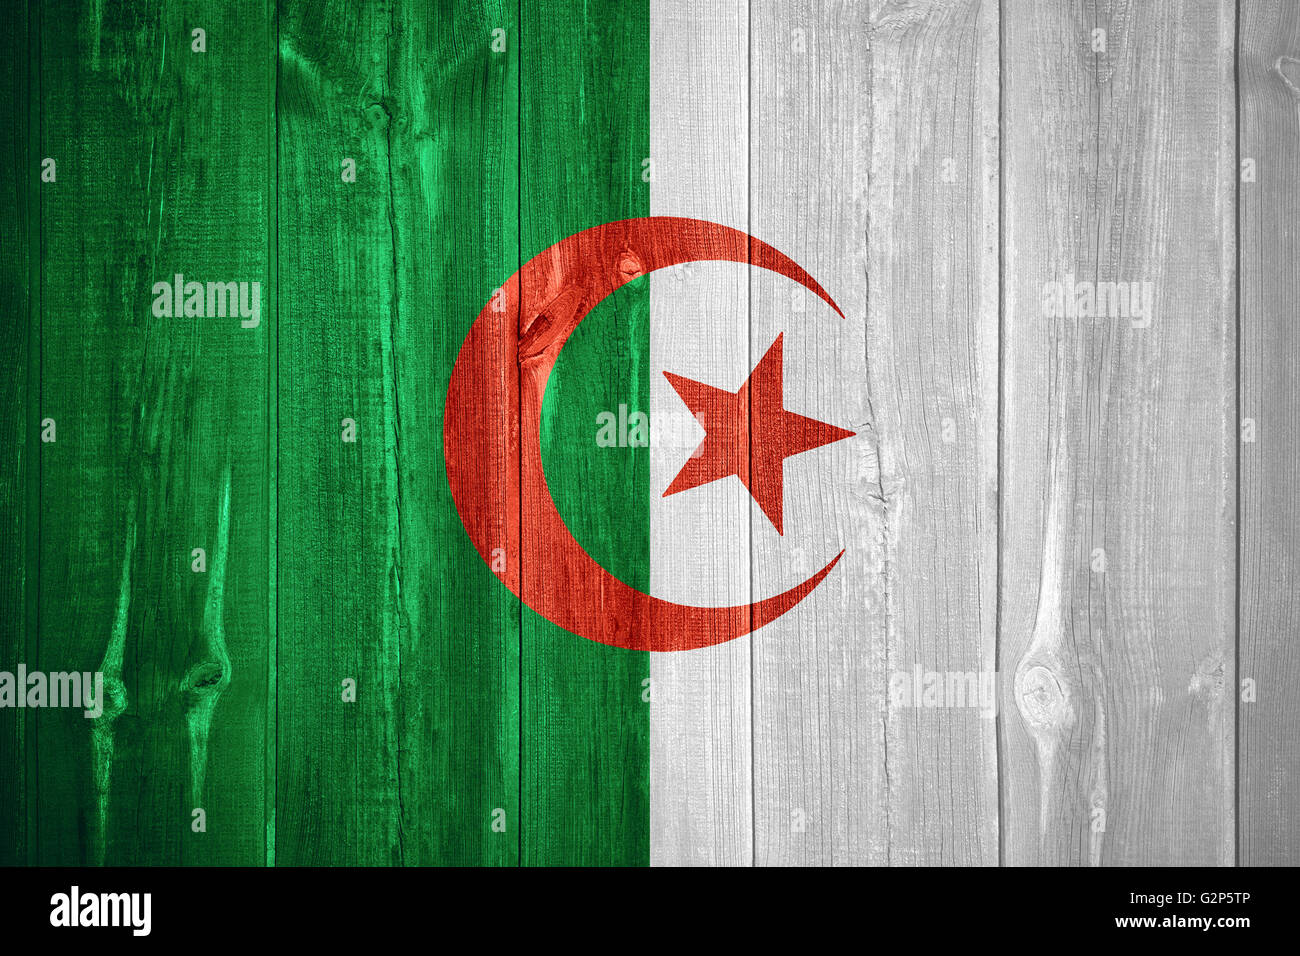 flag of Algeria or Algerian banner on wooden background Stock Photo